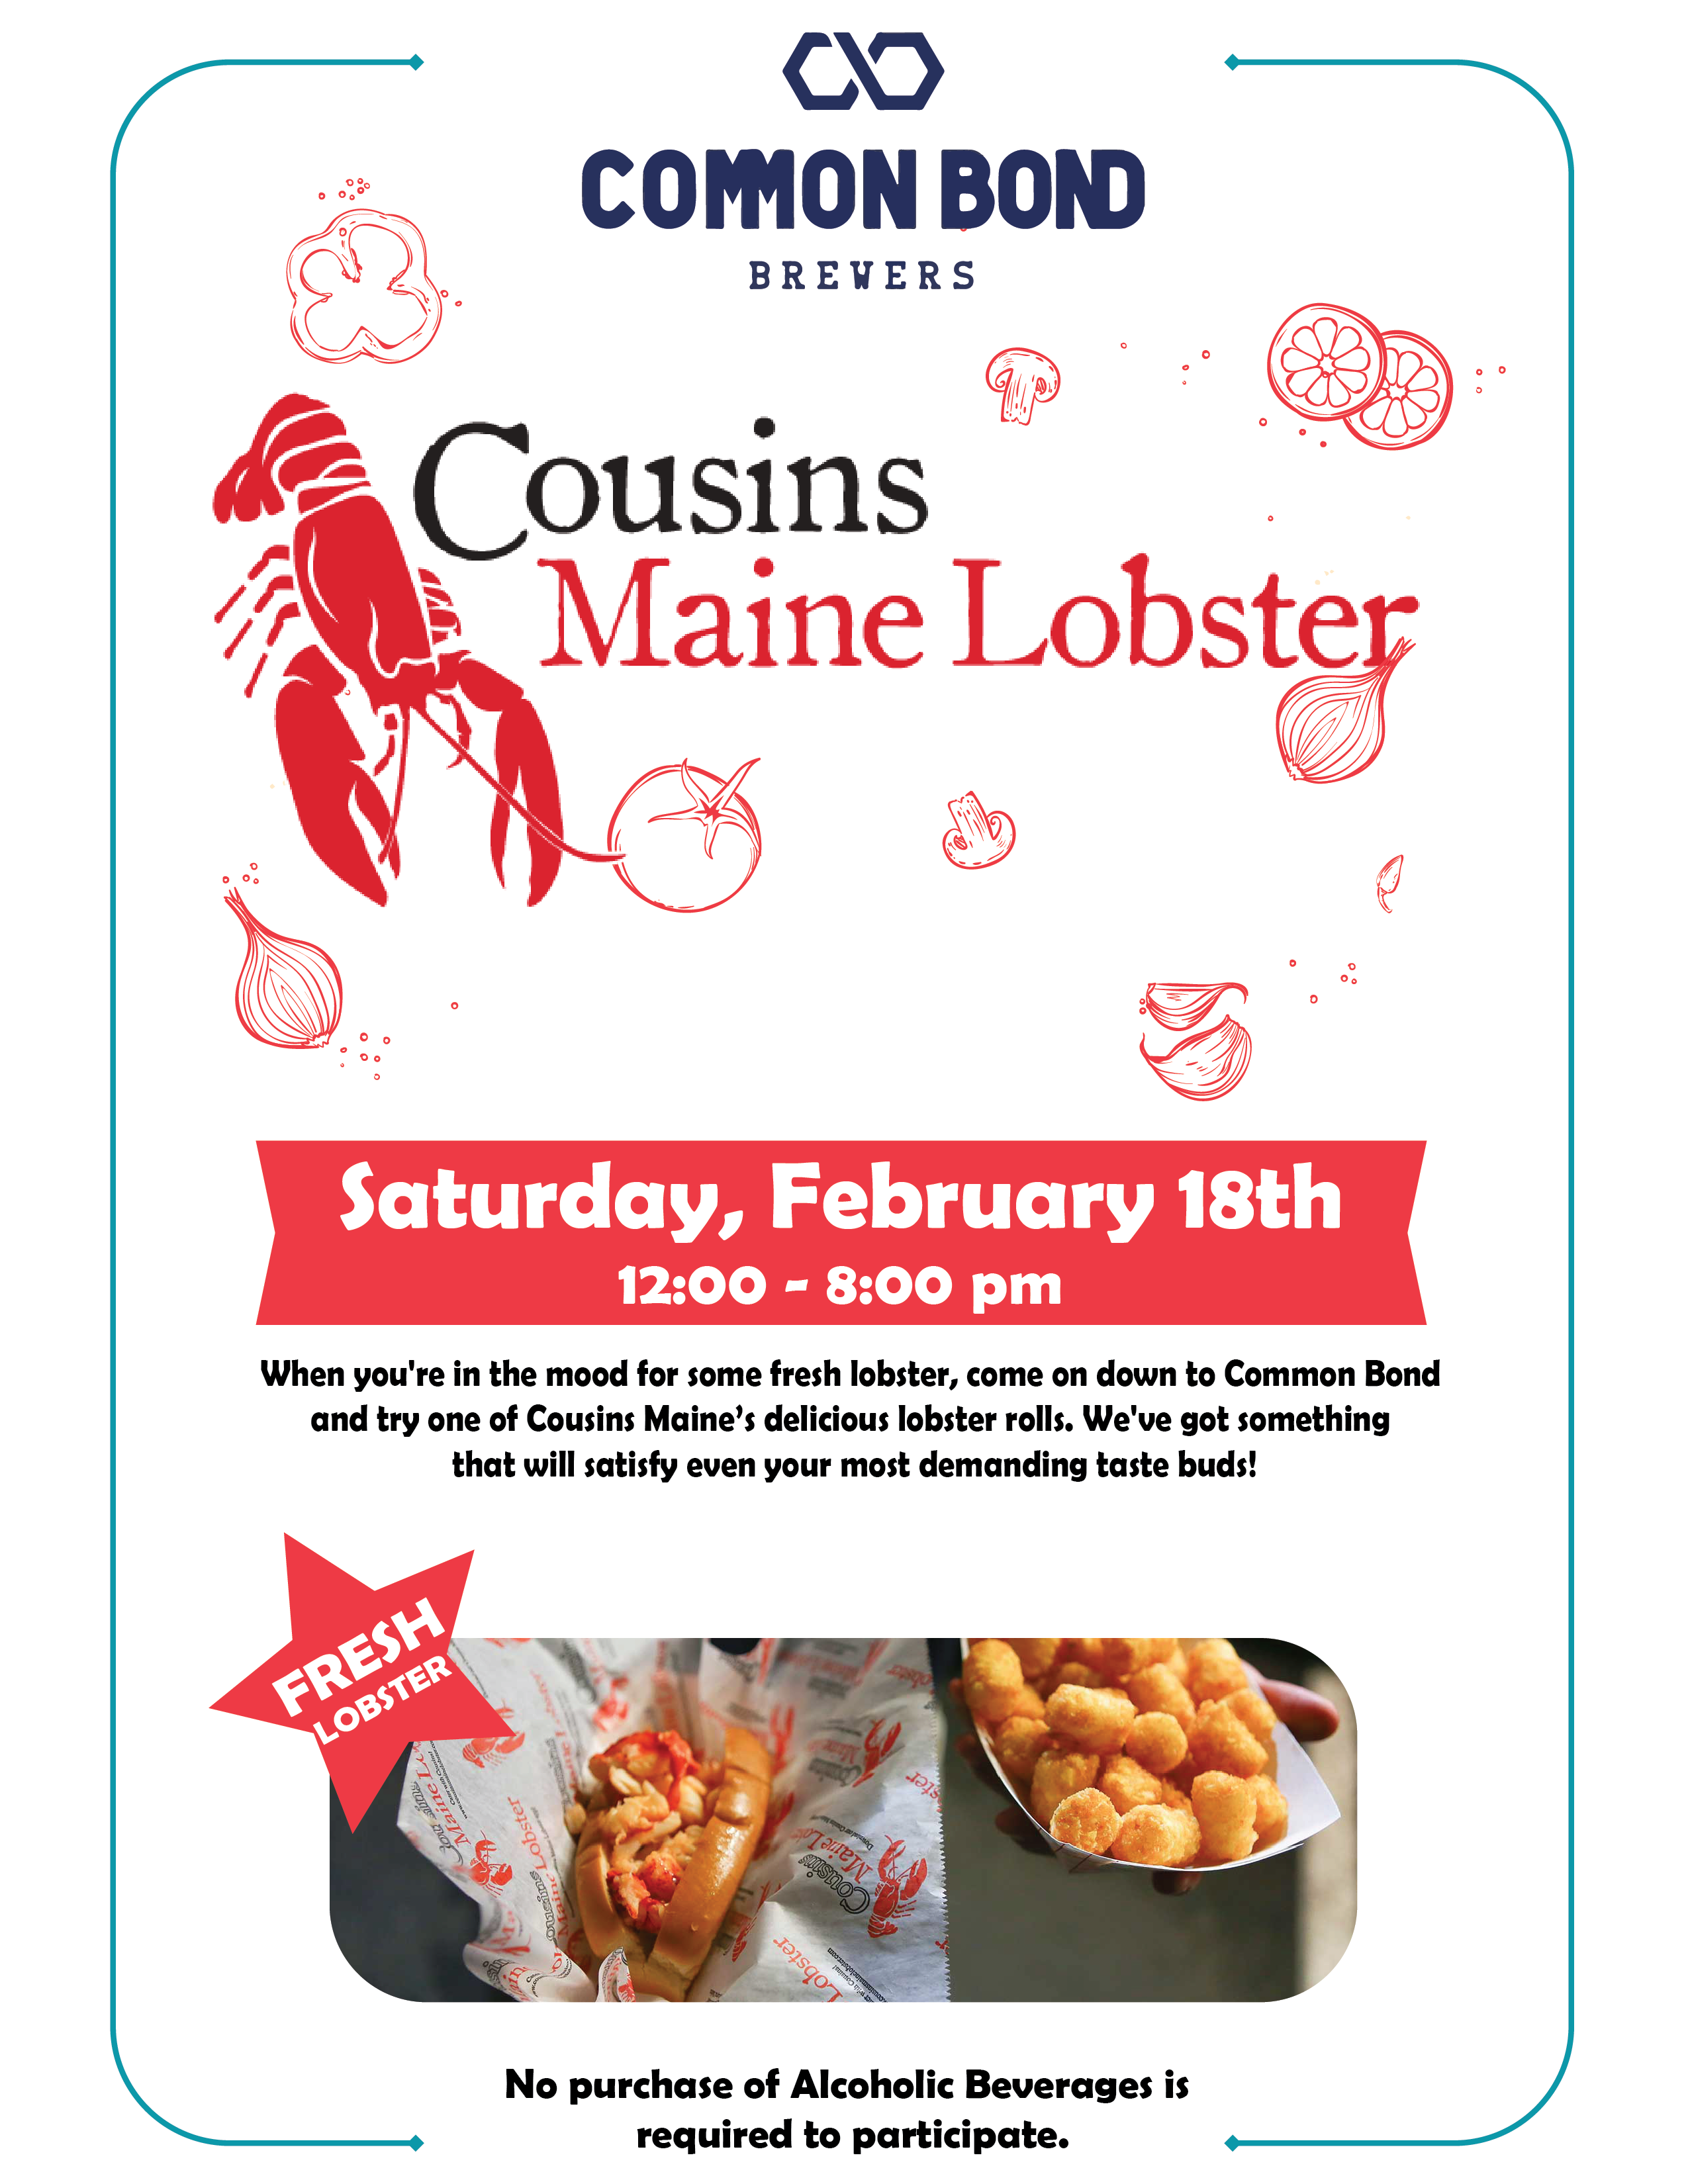 Food Truck at CBB: Cousins Maine Lobster